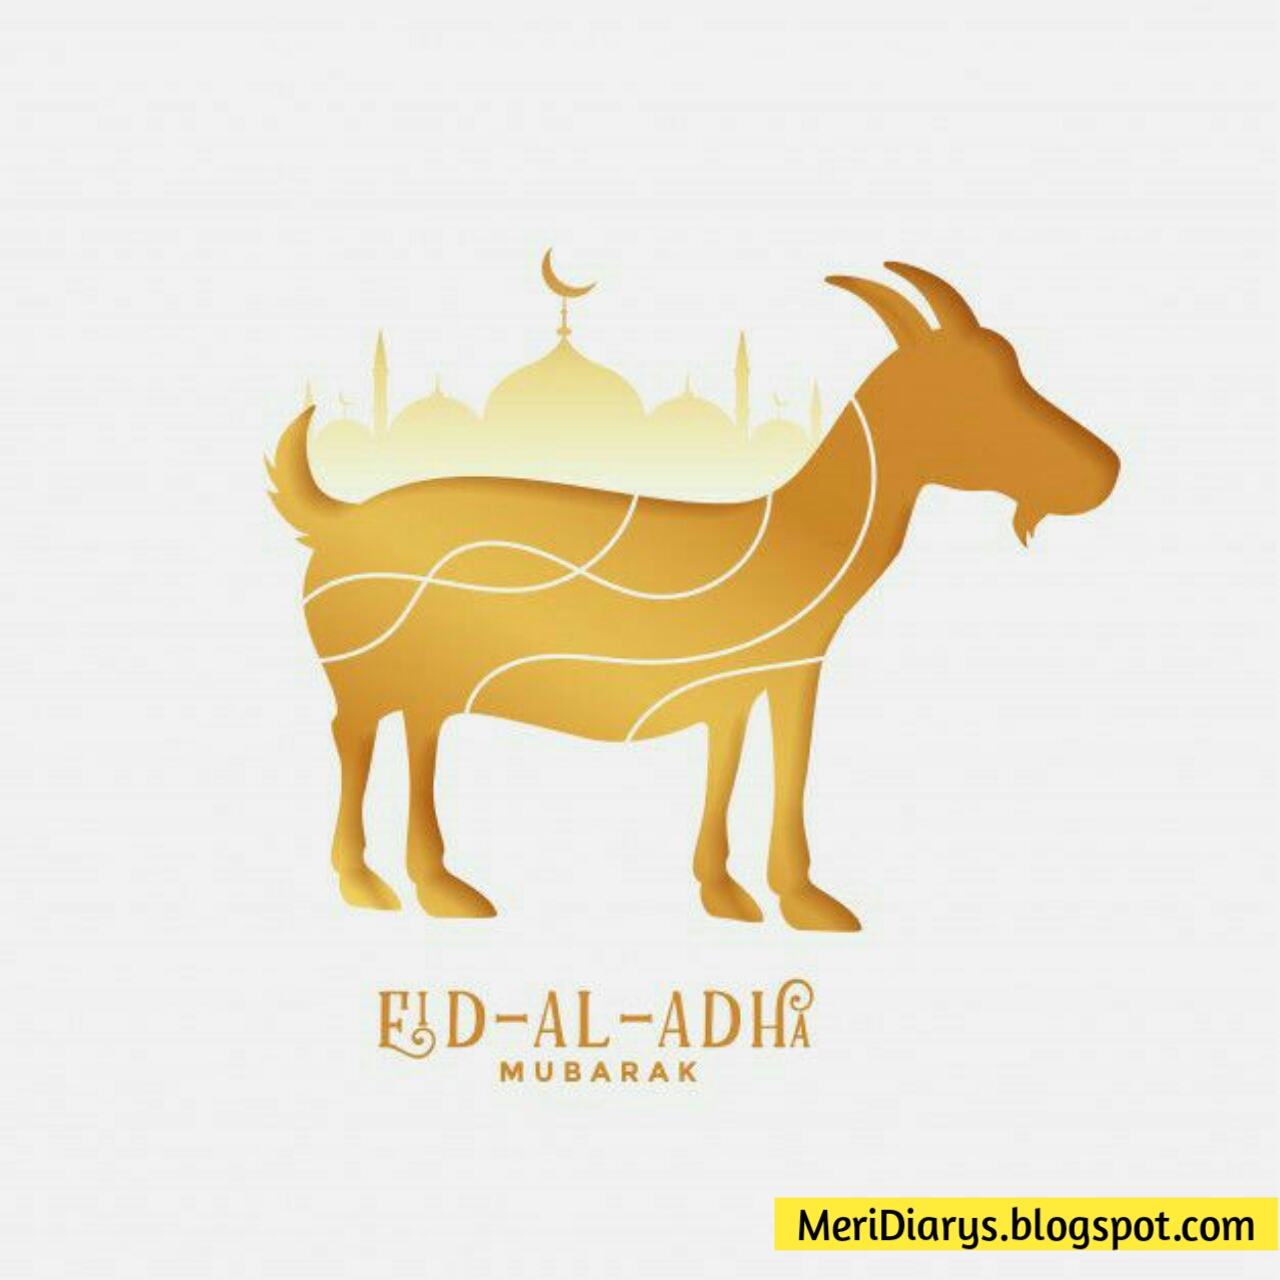 On this holy festival - Bakra Eid Mubarak SMS